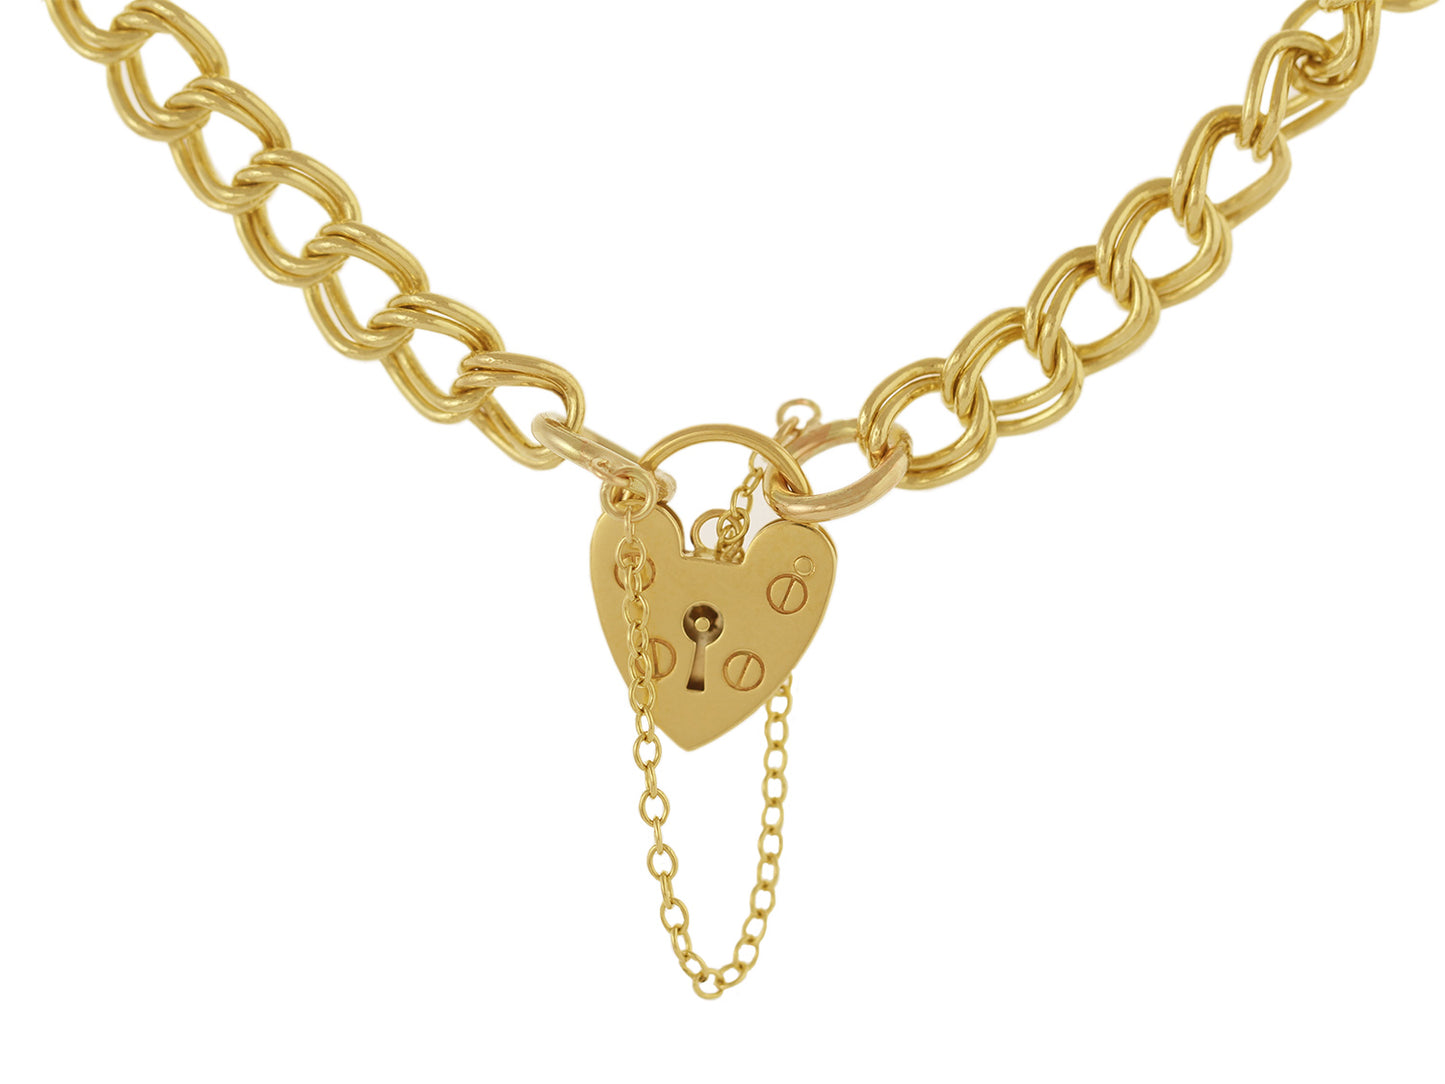 9K Yellow Gold Handmade Bracelet With Heart Padlock